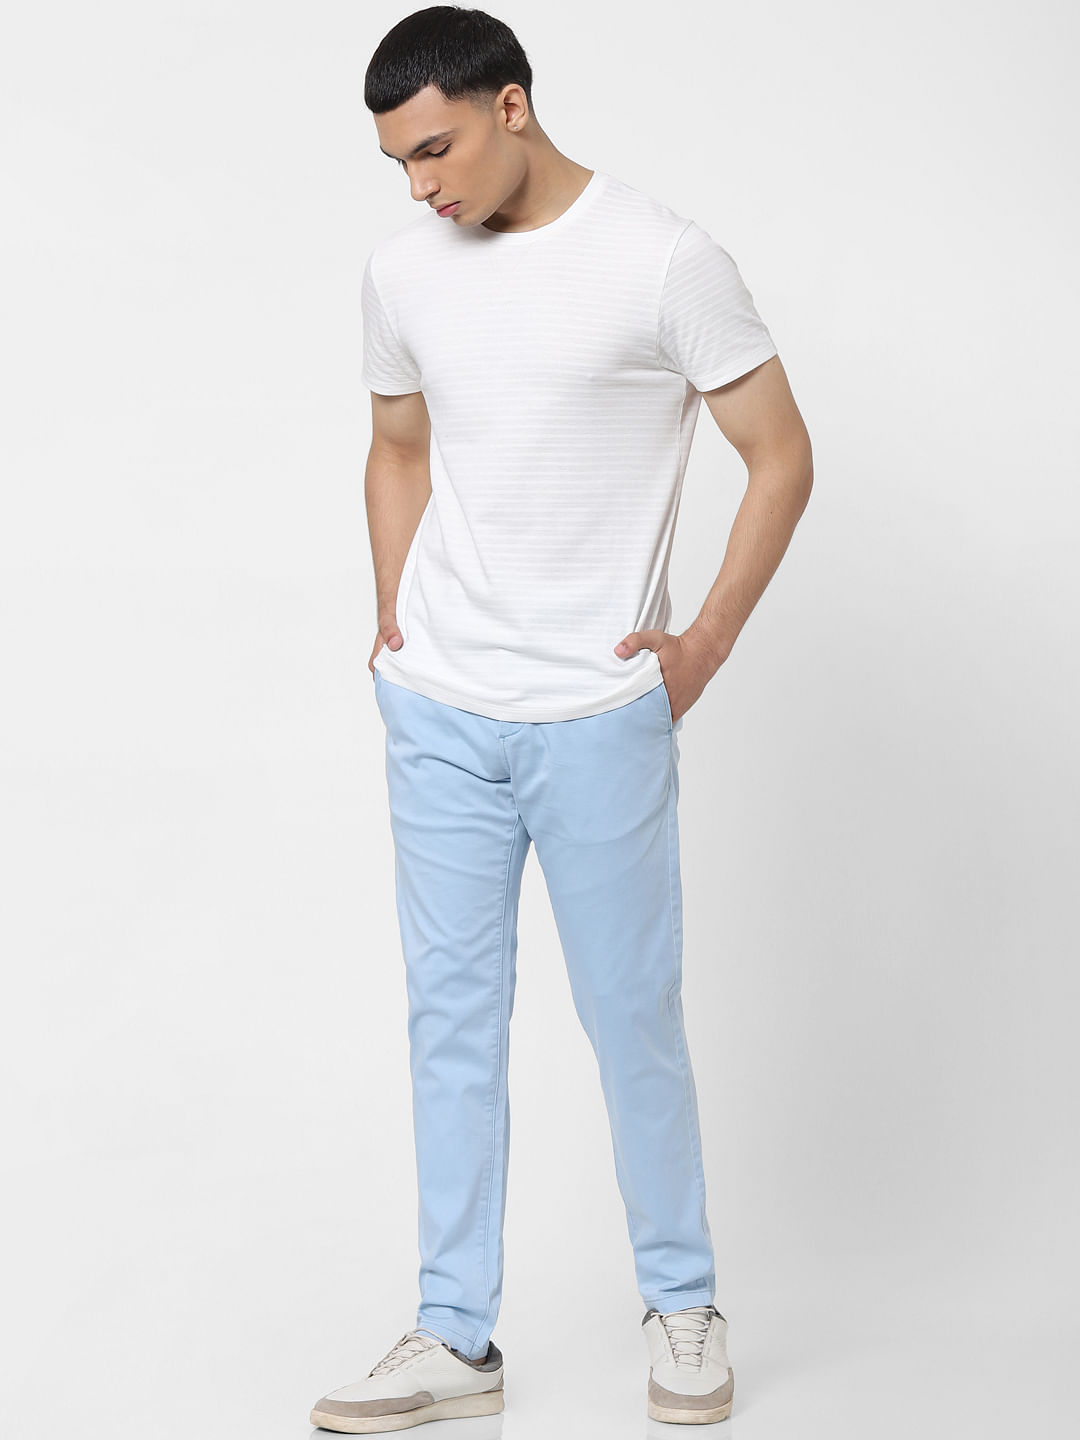 MEN FASHION Trousers Skinny slim Jack & Jones Chino trouser Navy Blue discount 56% 